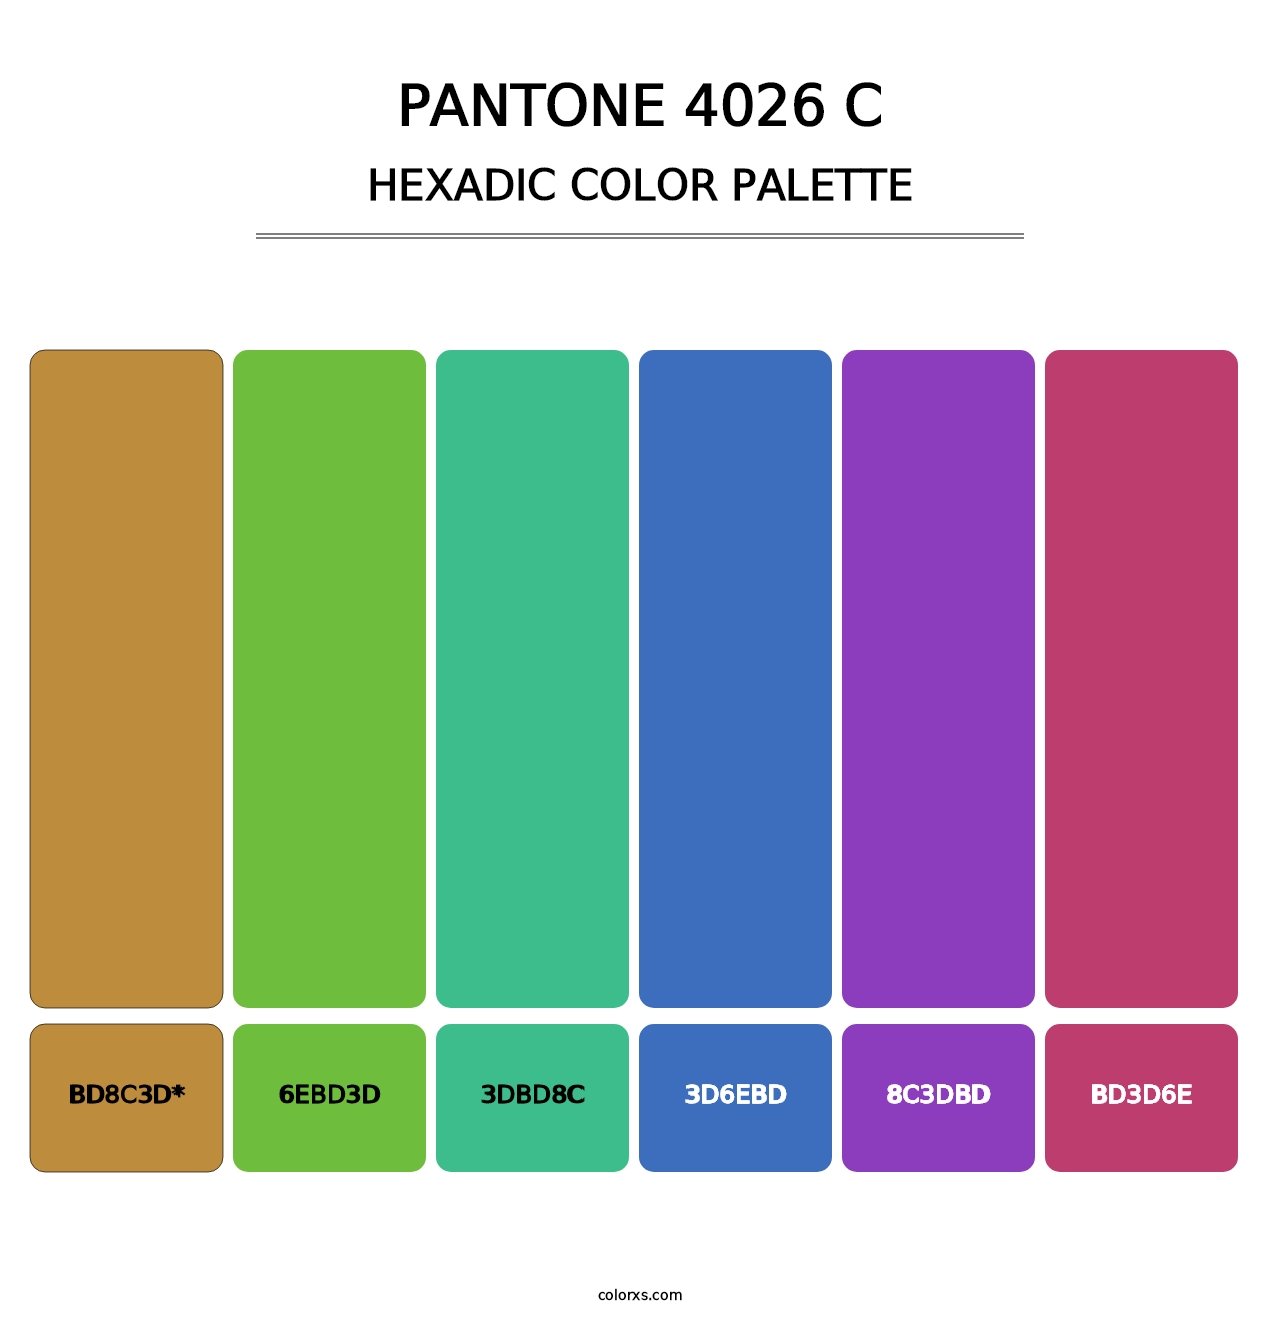 PANTONE 4026 C - Hexadic Color Palette